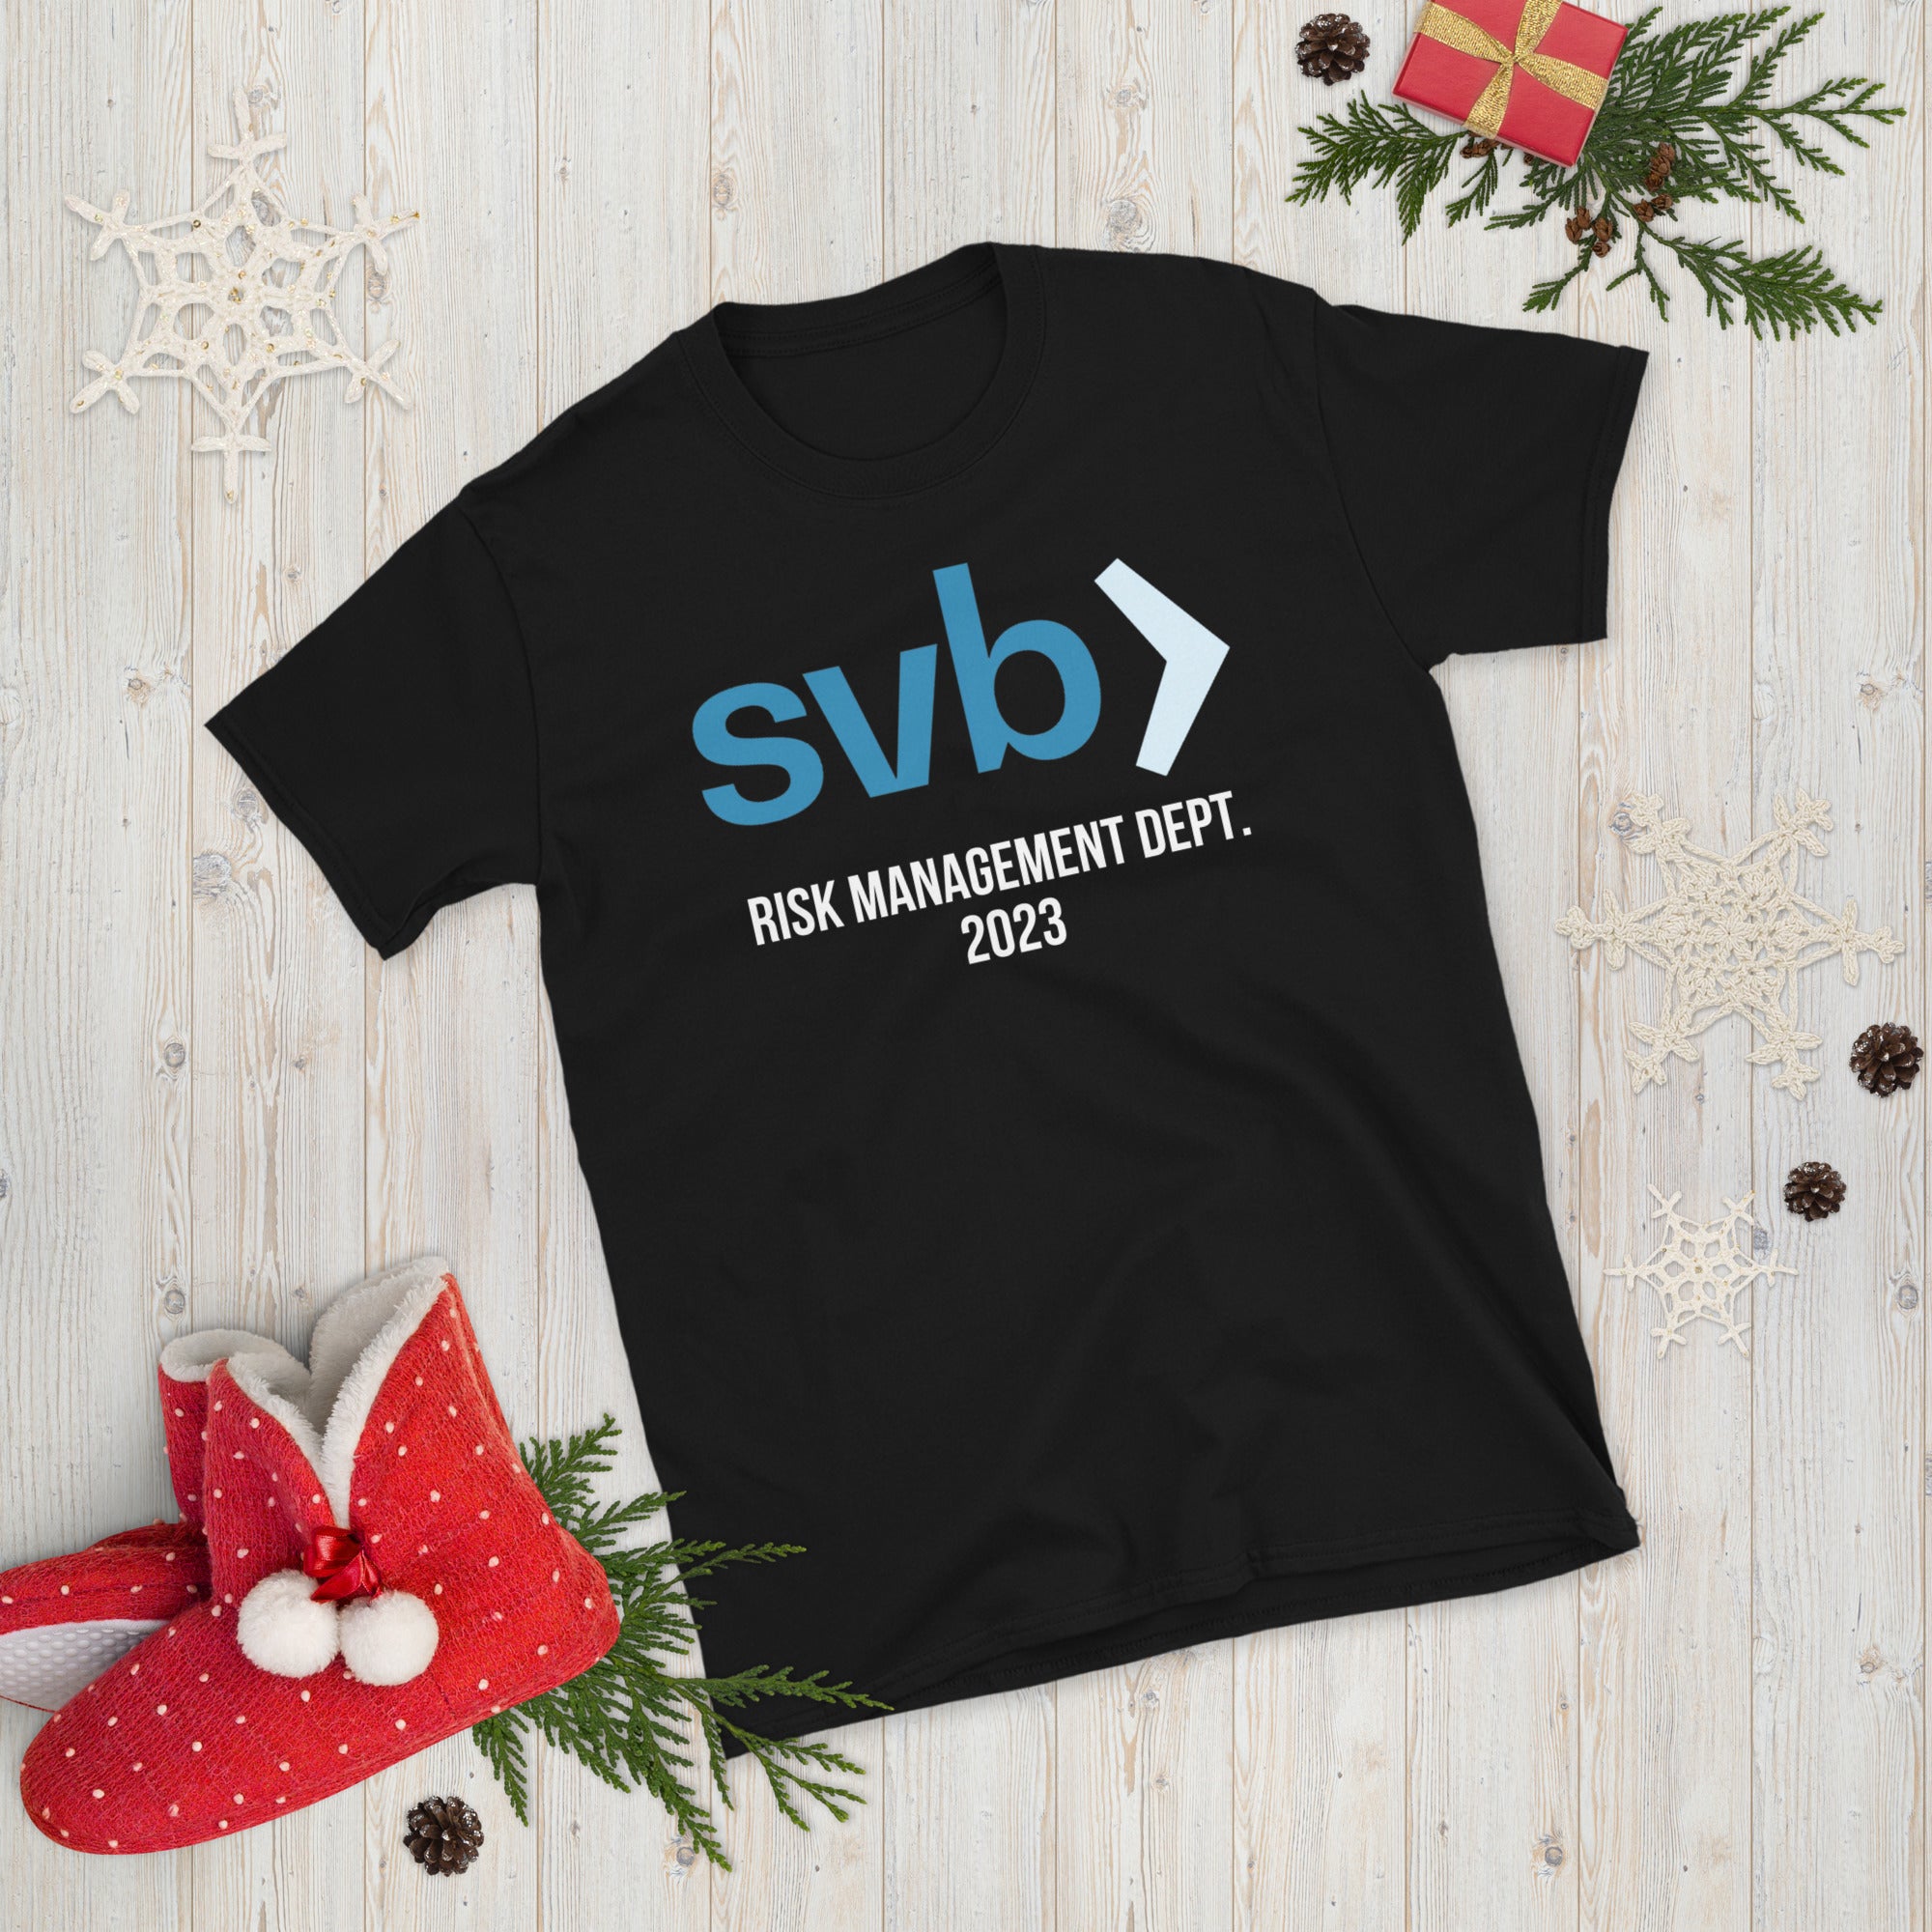 SVB Silicon Valley Bank Risk Management Shirt, SVB Bank Run, Risk Management Dept 2023, Funny Stock Market Tee, SVB Tshirt - Madeinsea©